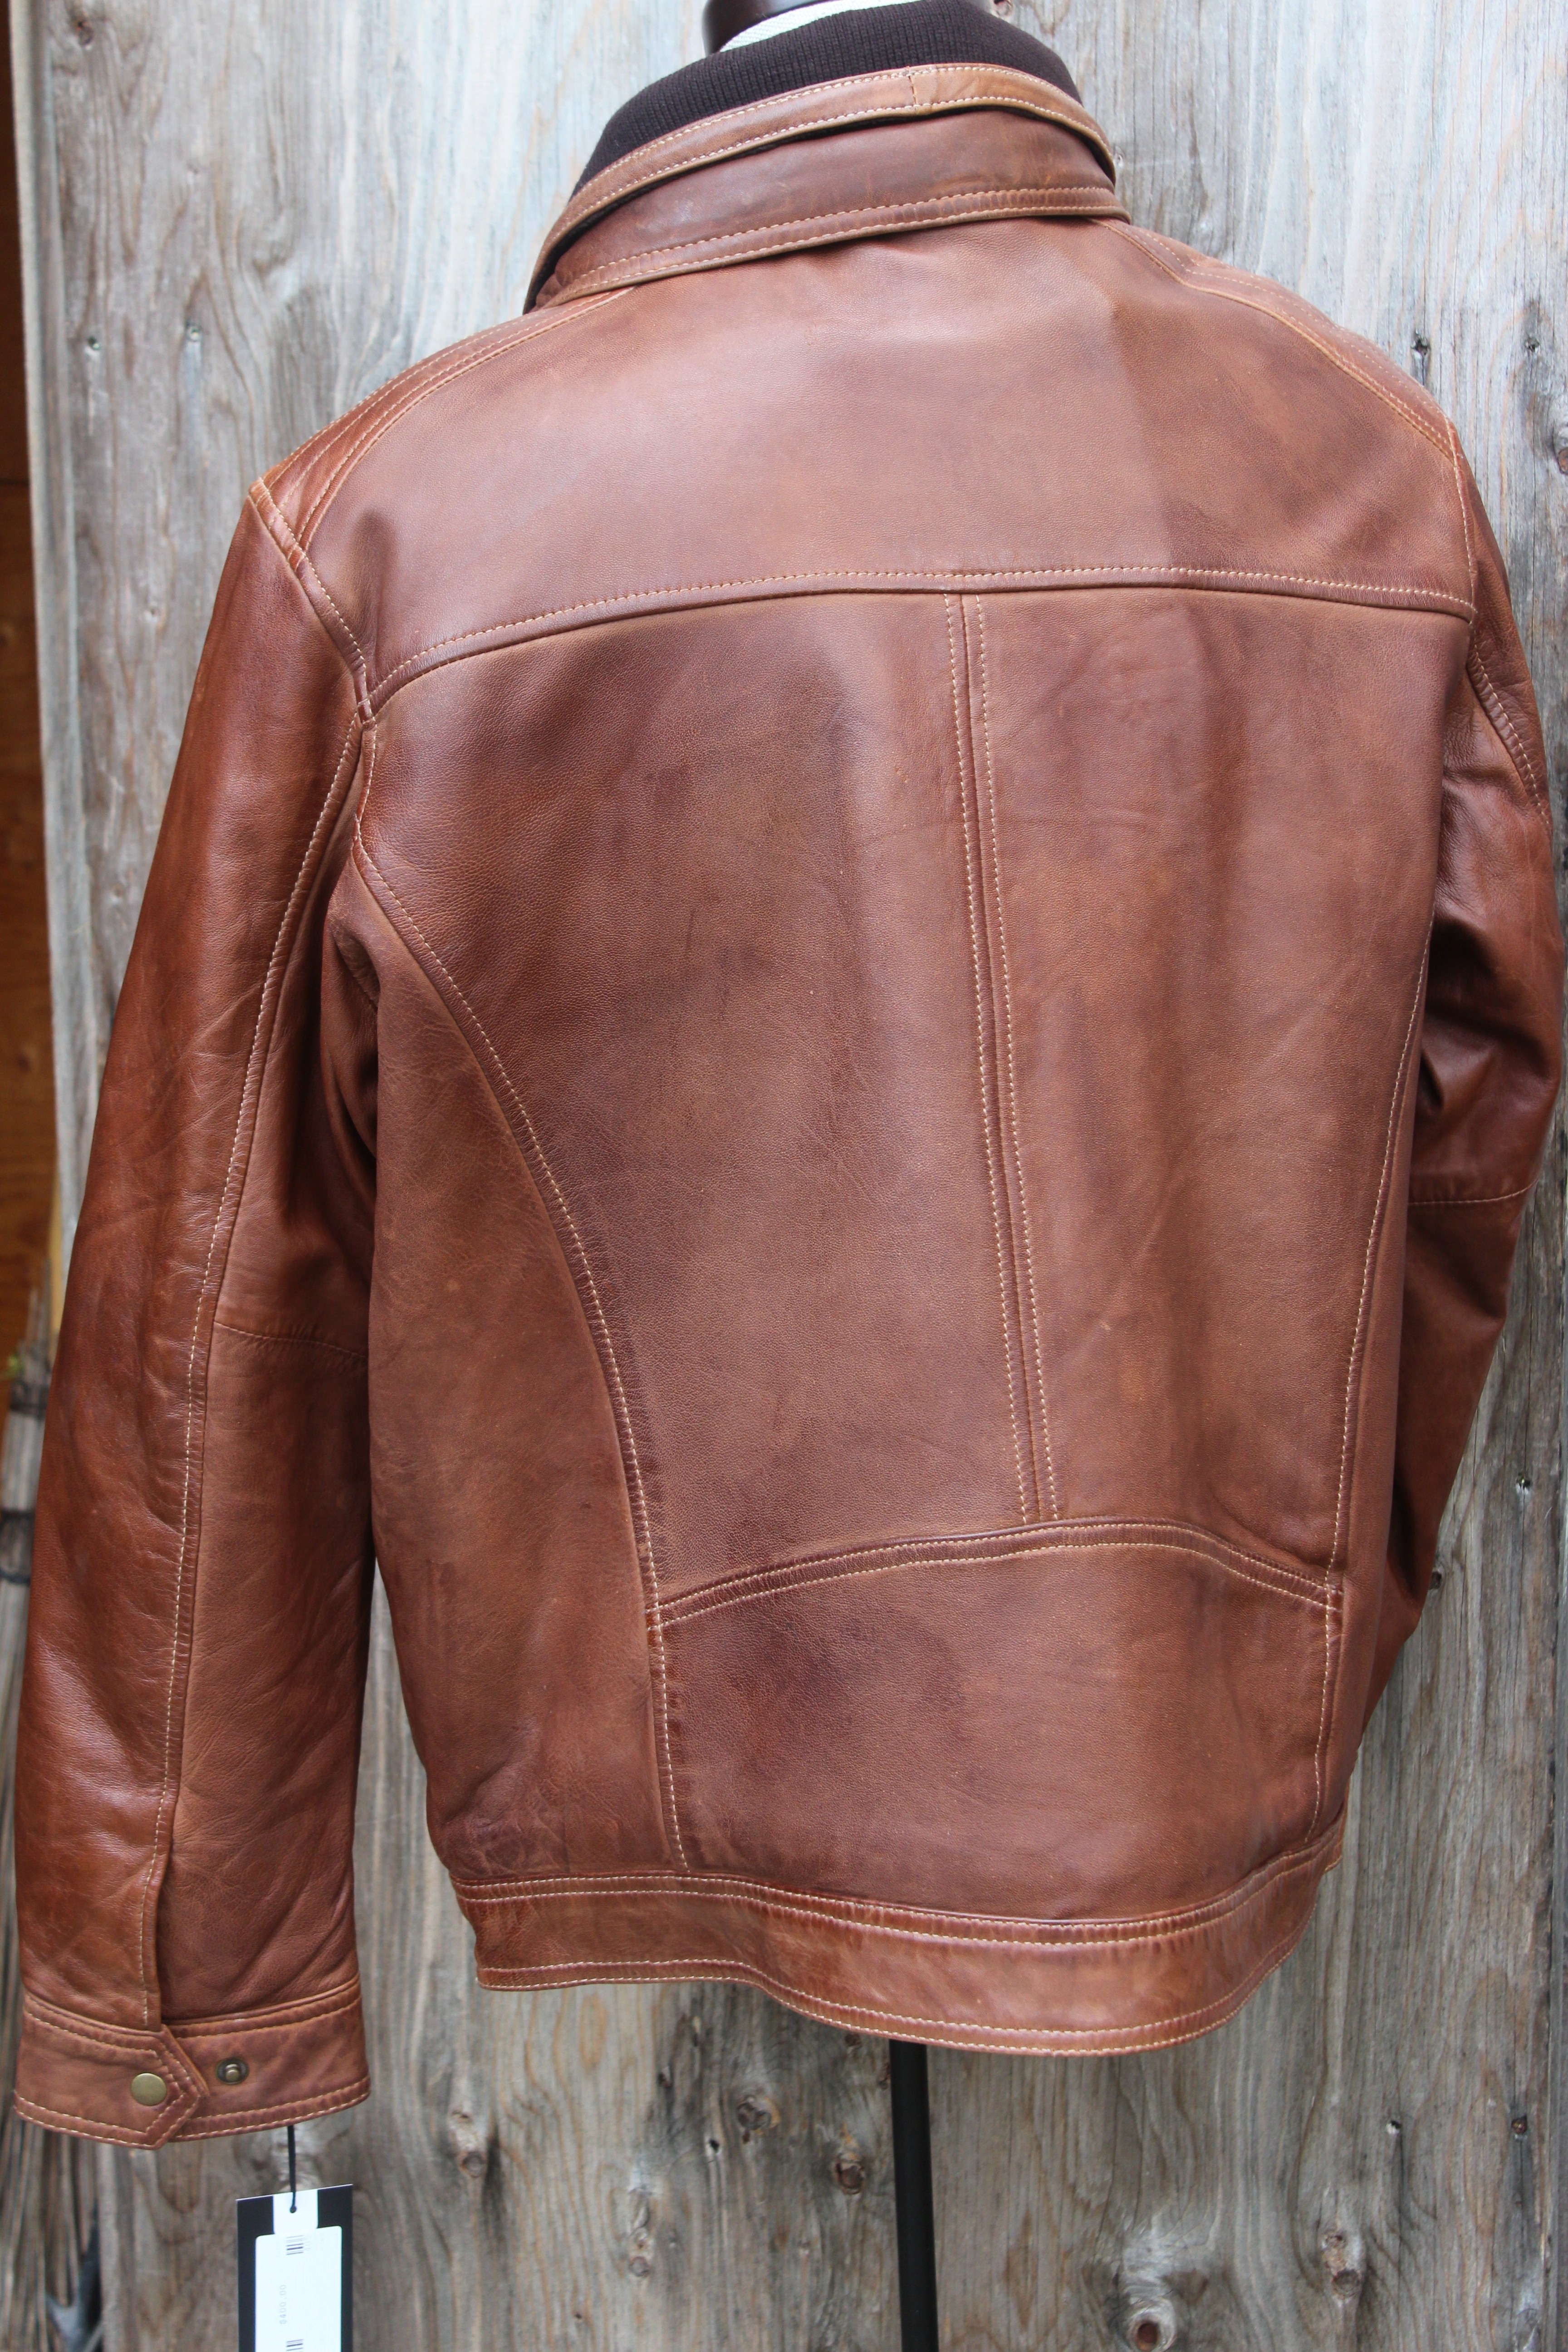 Cognac Leather-$400.00
Plonge Leathers
Style #:40578C
